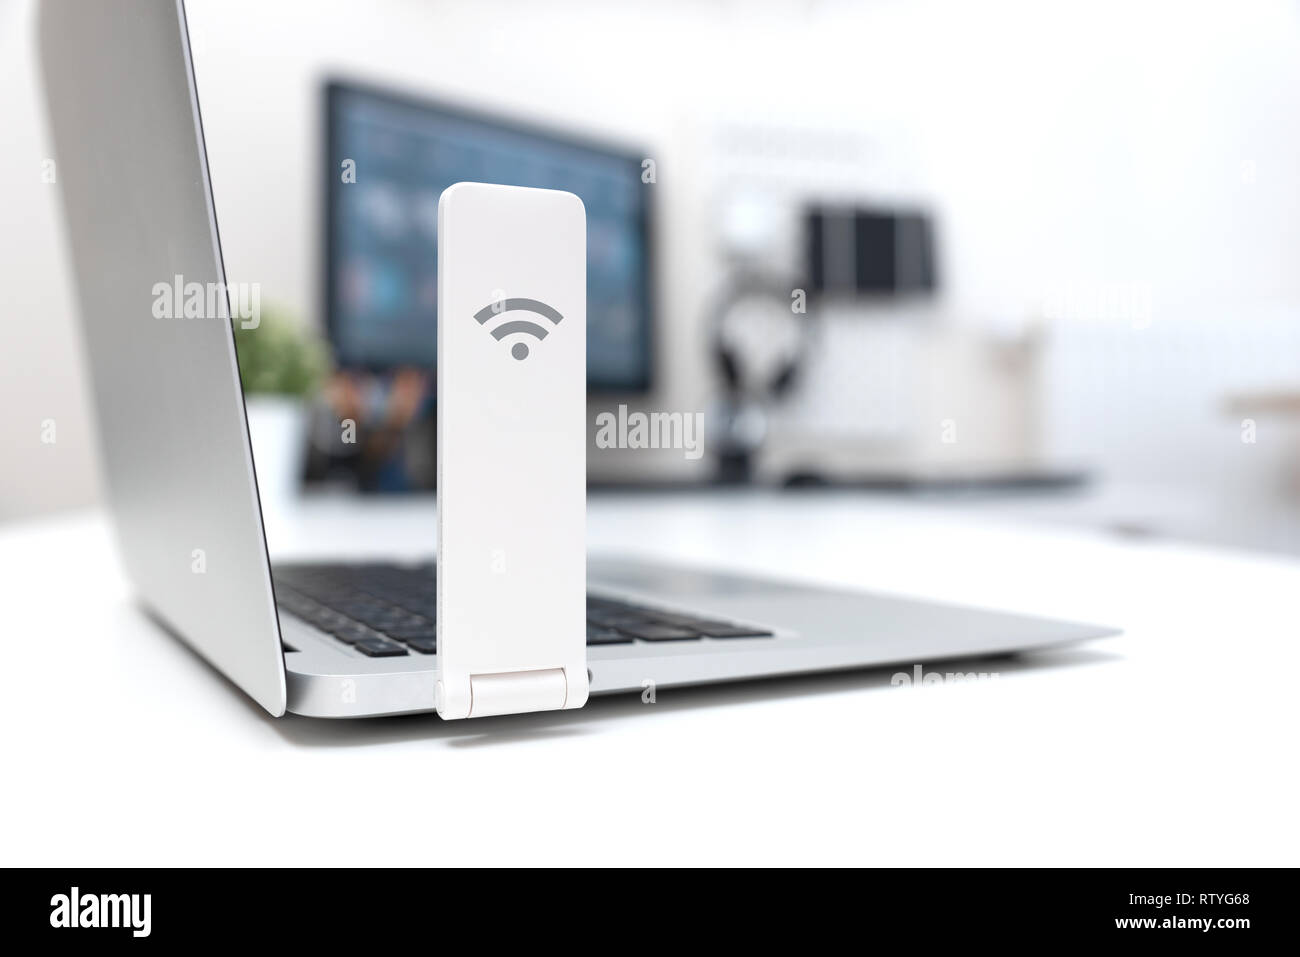 Wireless internet concept. Mobile network expander or mobile internet modem  USB stick Stock Photo - Alamy